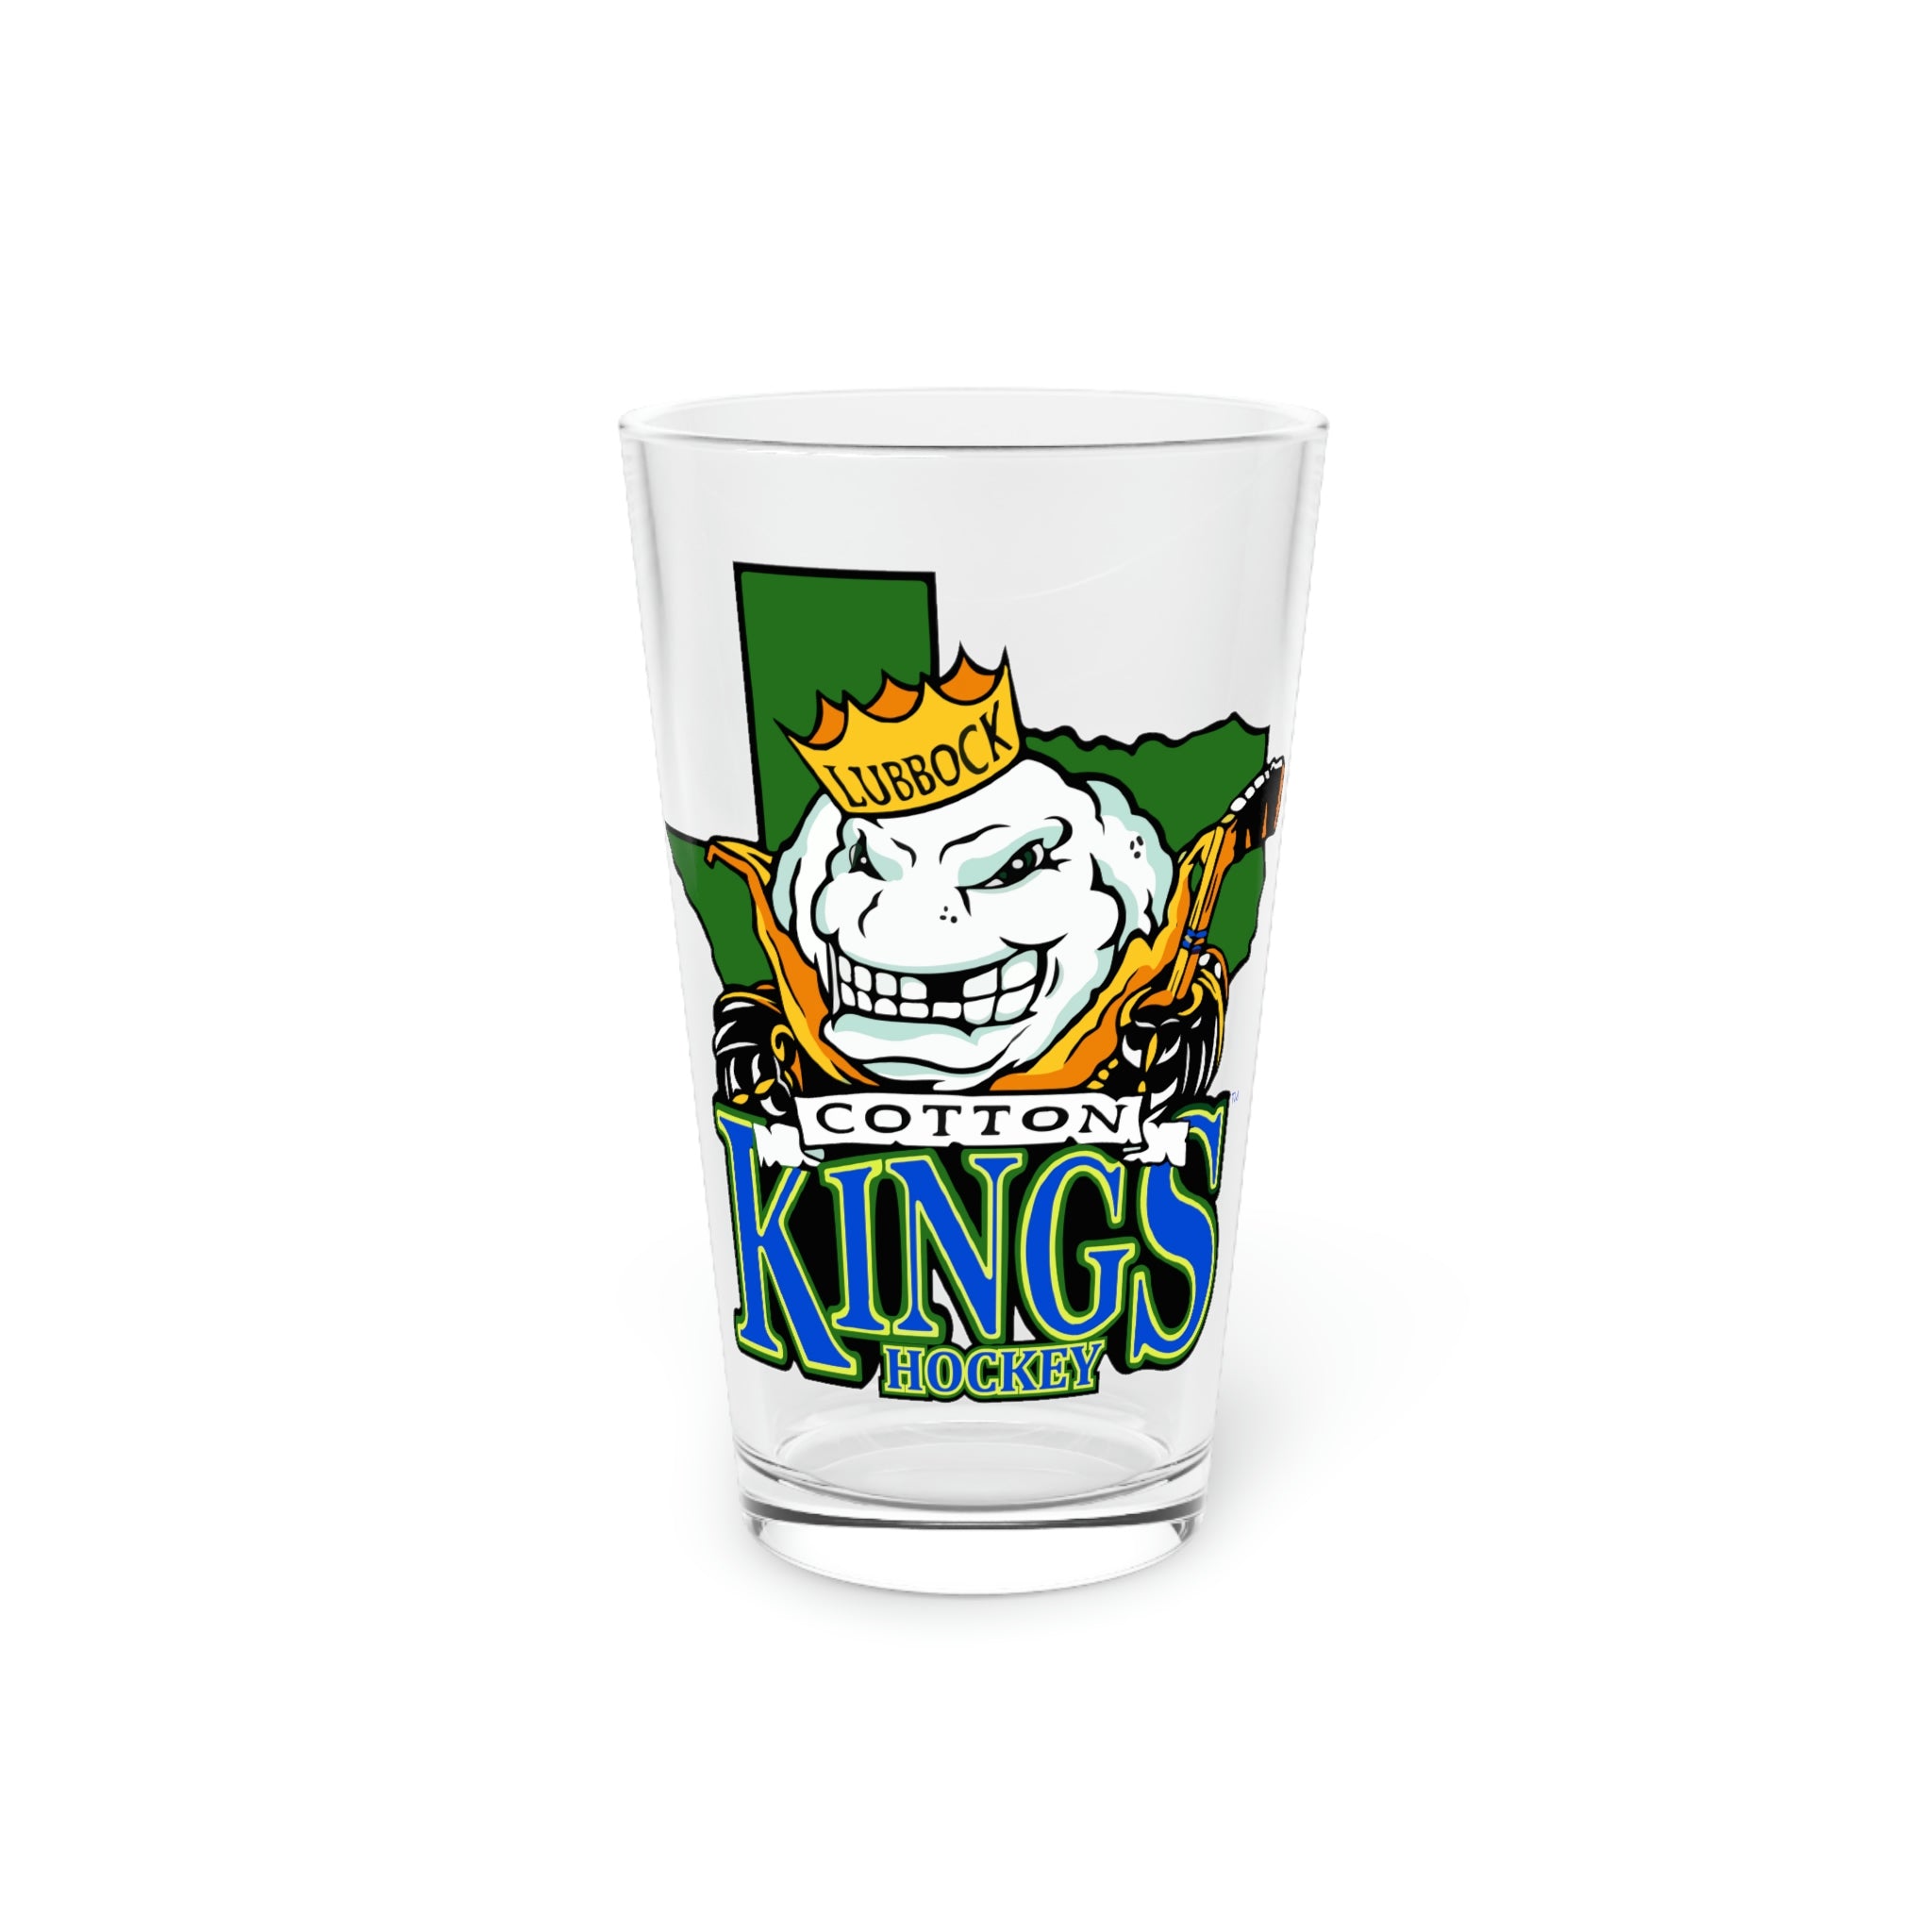 Lubbock Cotton Kings Pint Glass